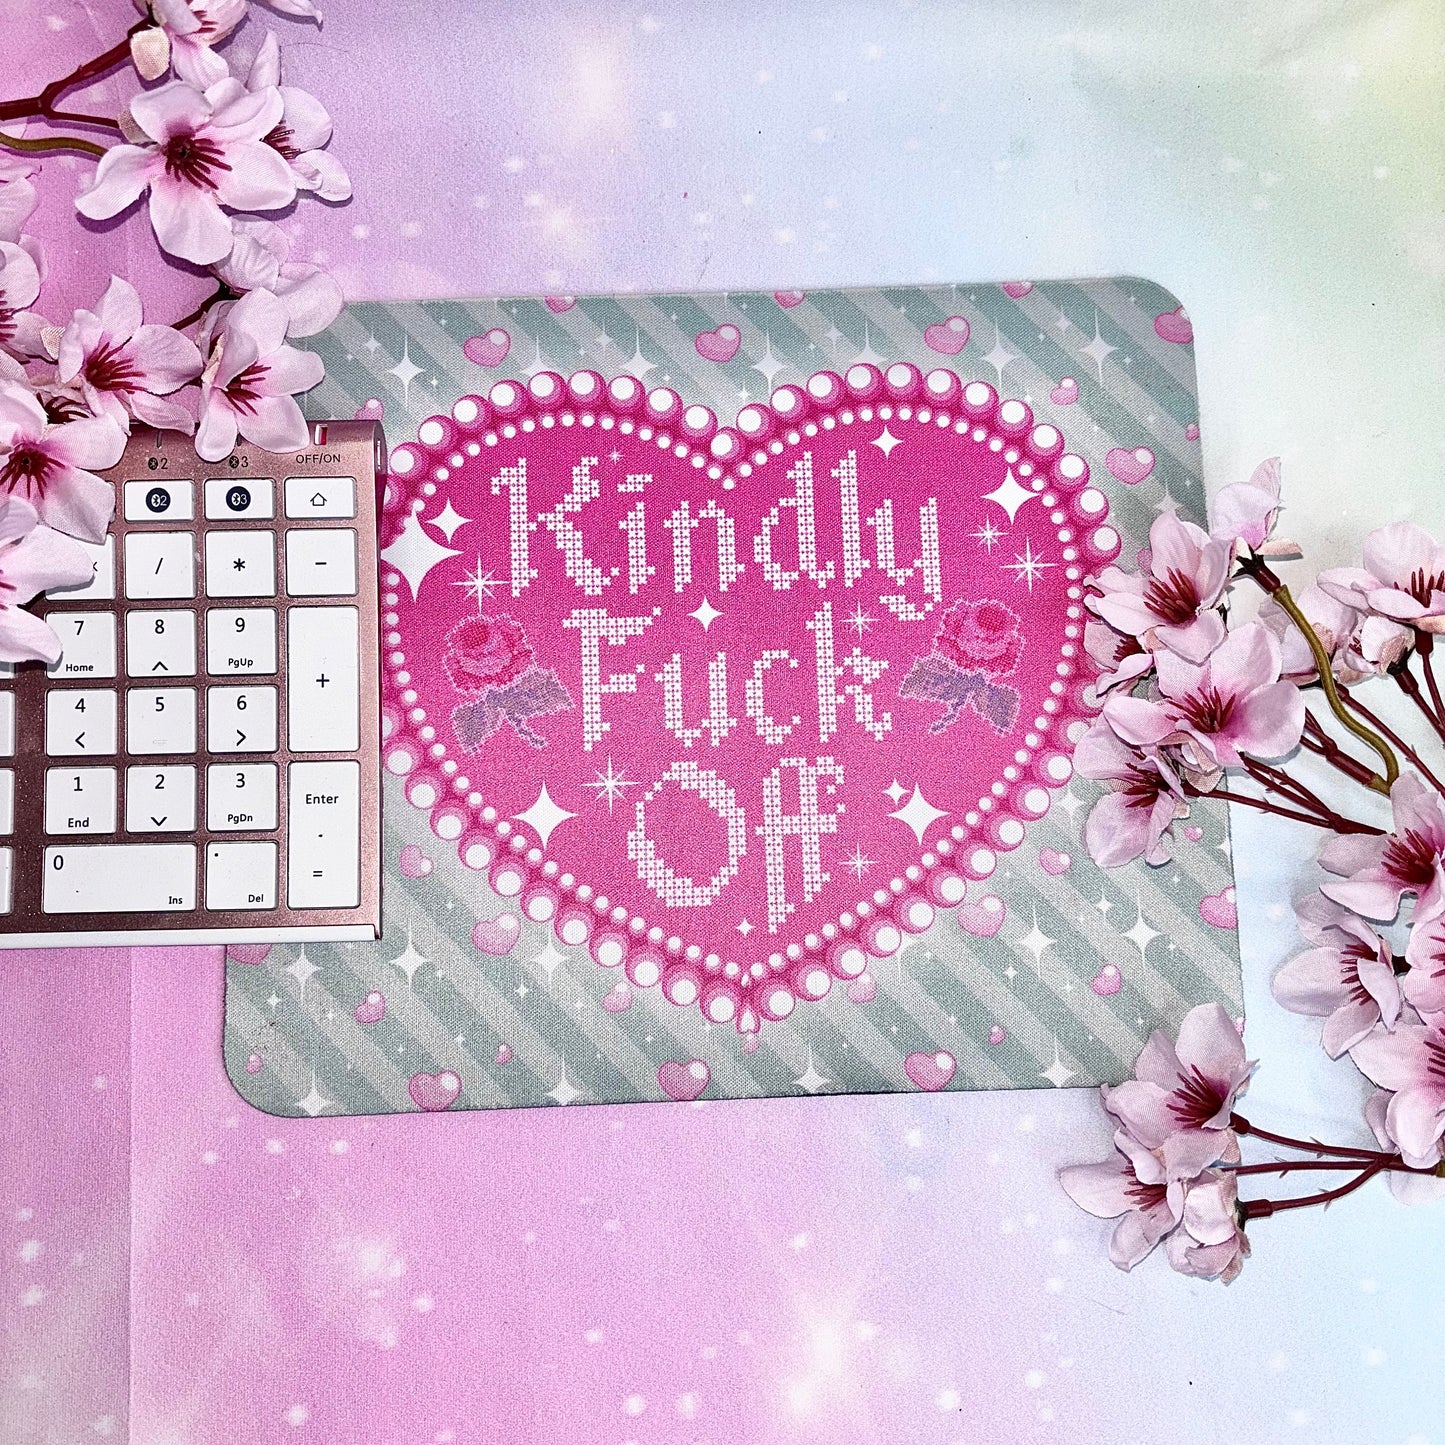 Kindly F*ck Off mousepad | mousepad, Kawaii mousepad, Rainbow mousepad, cute mousepads, funny mousepads, small business, f*ck off